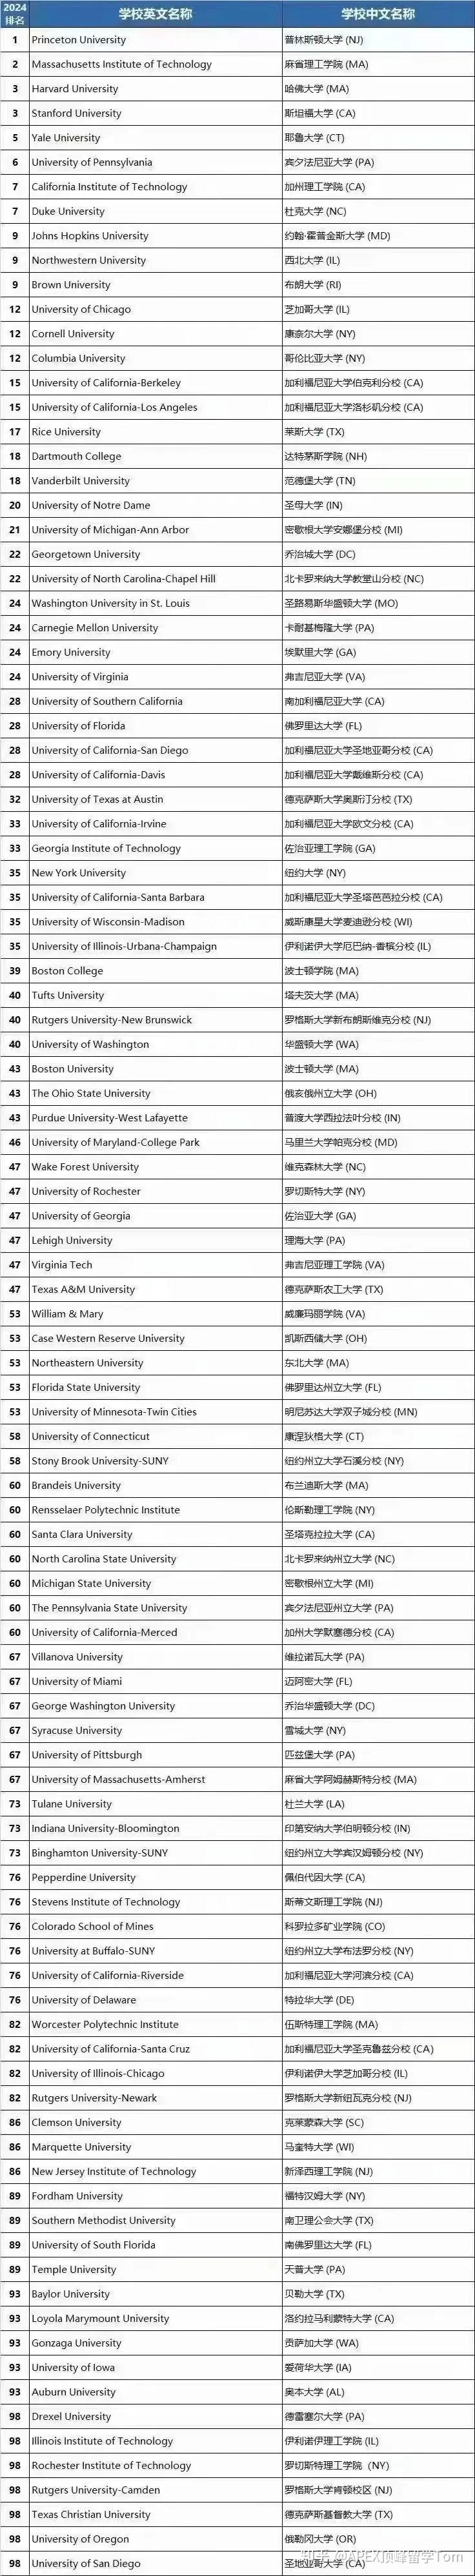 usnews美国大学排名图片